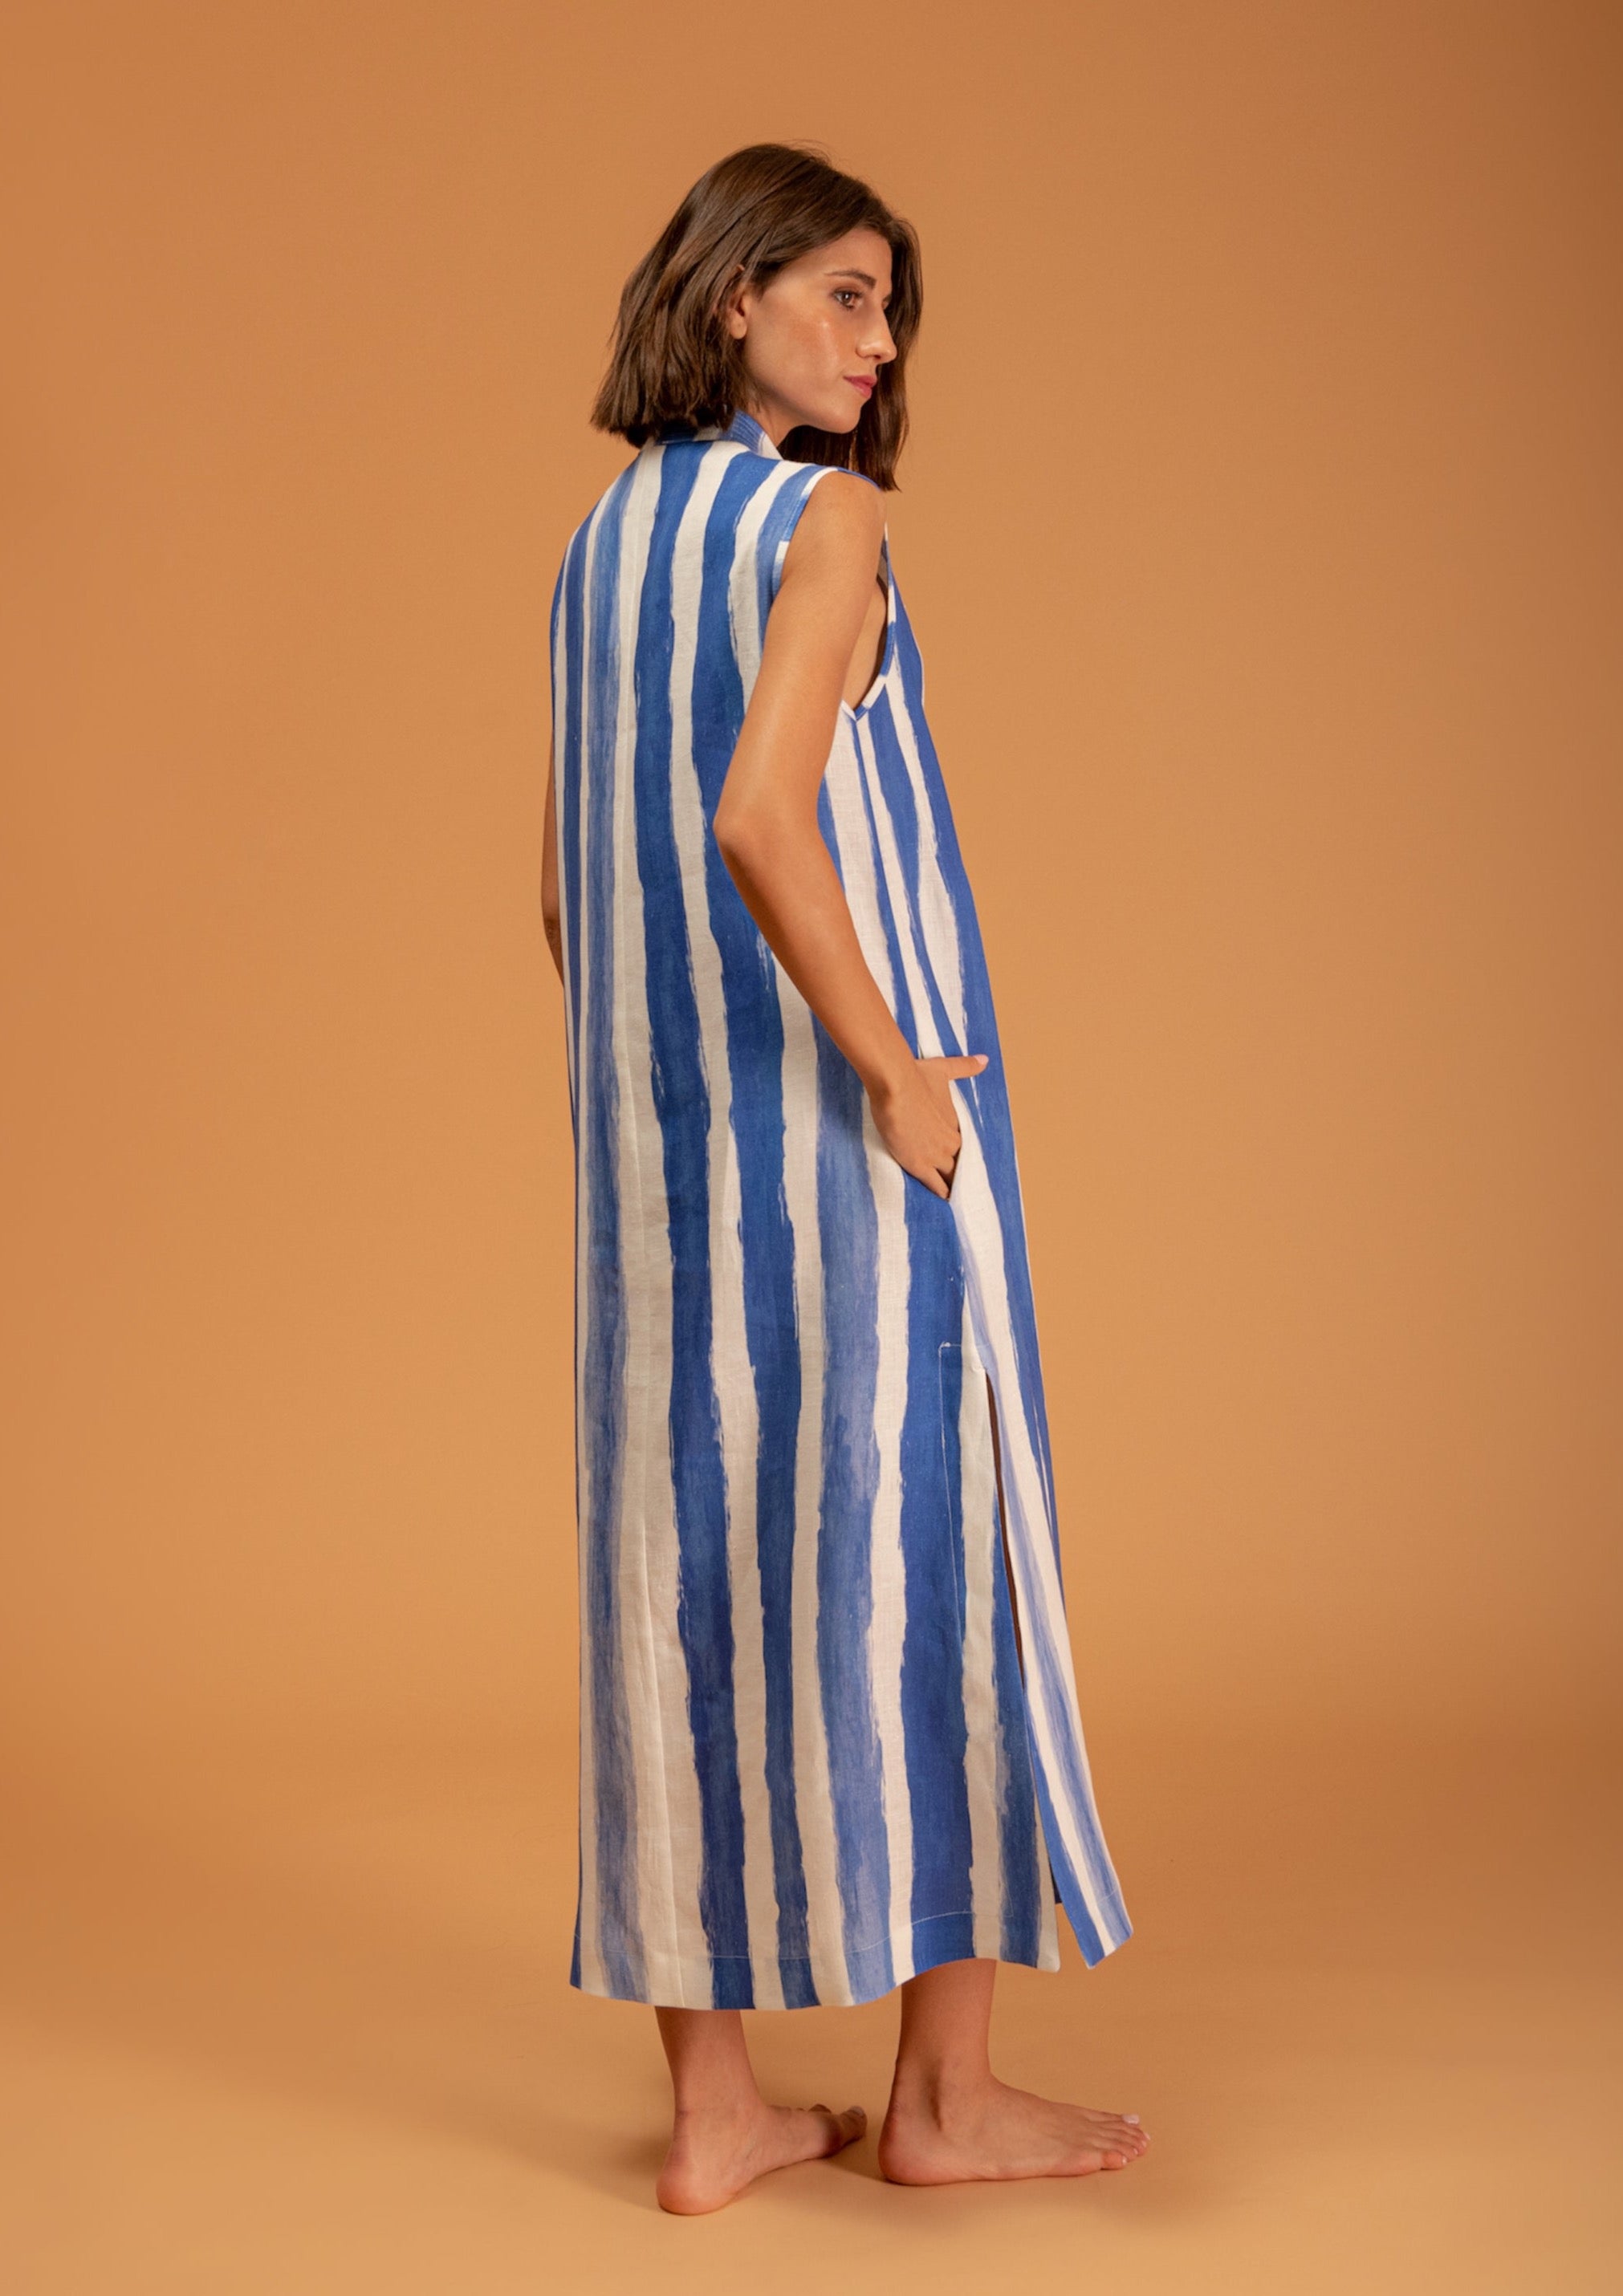 Galeria-Frade Blue Stripes Dress-Justbrazil